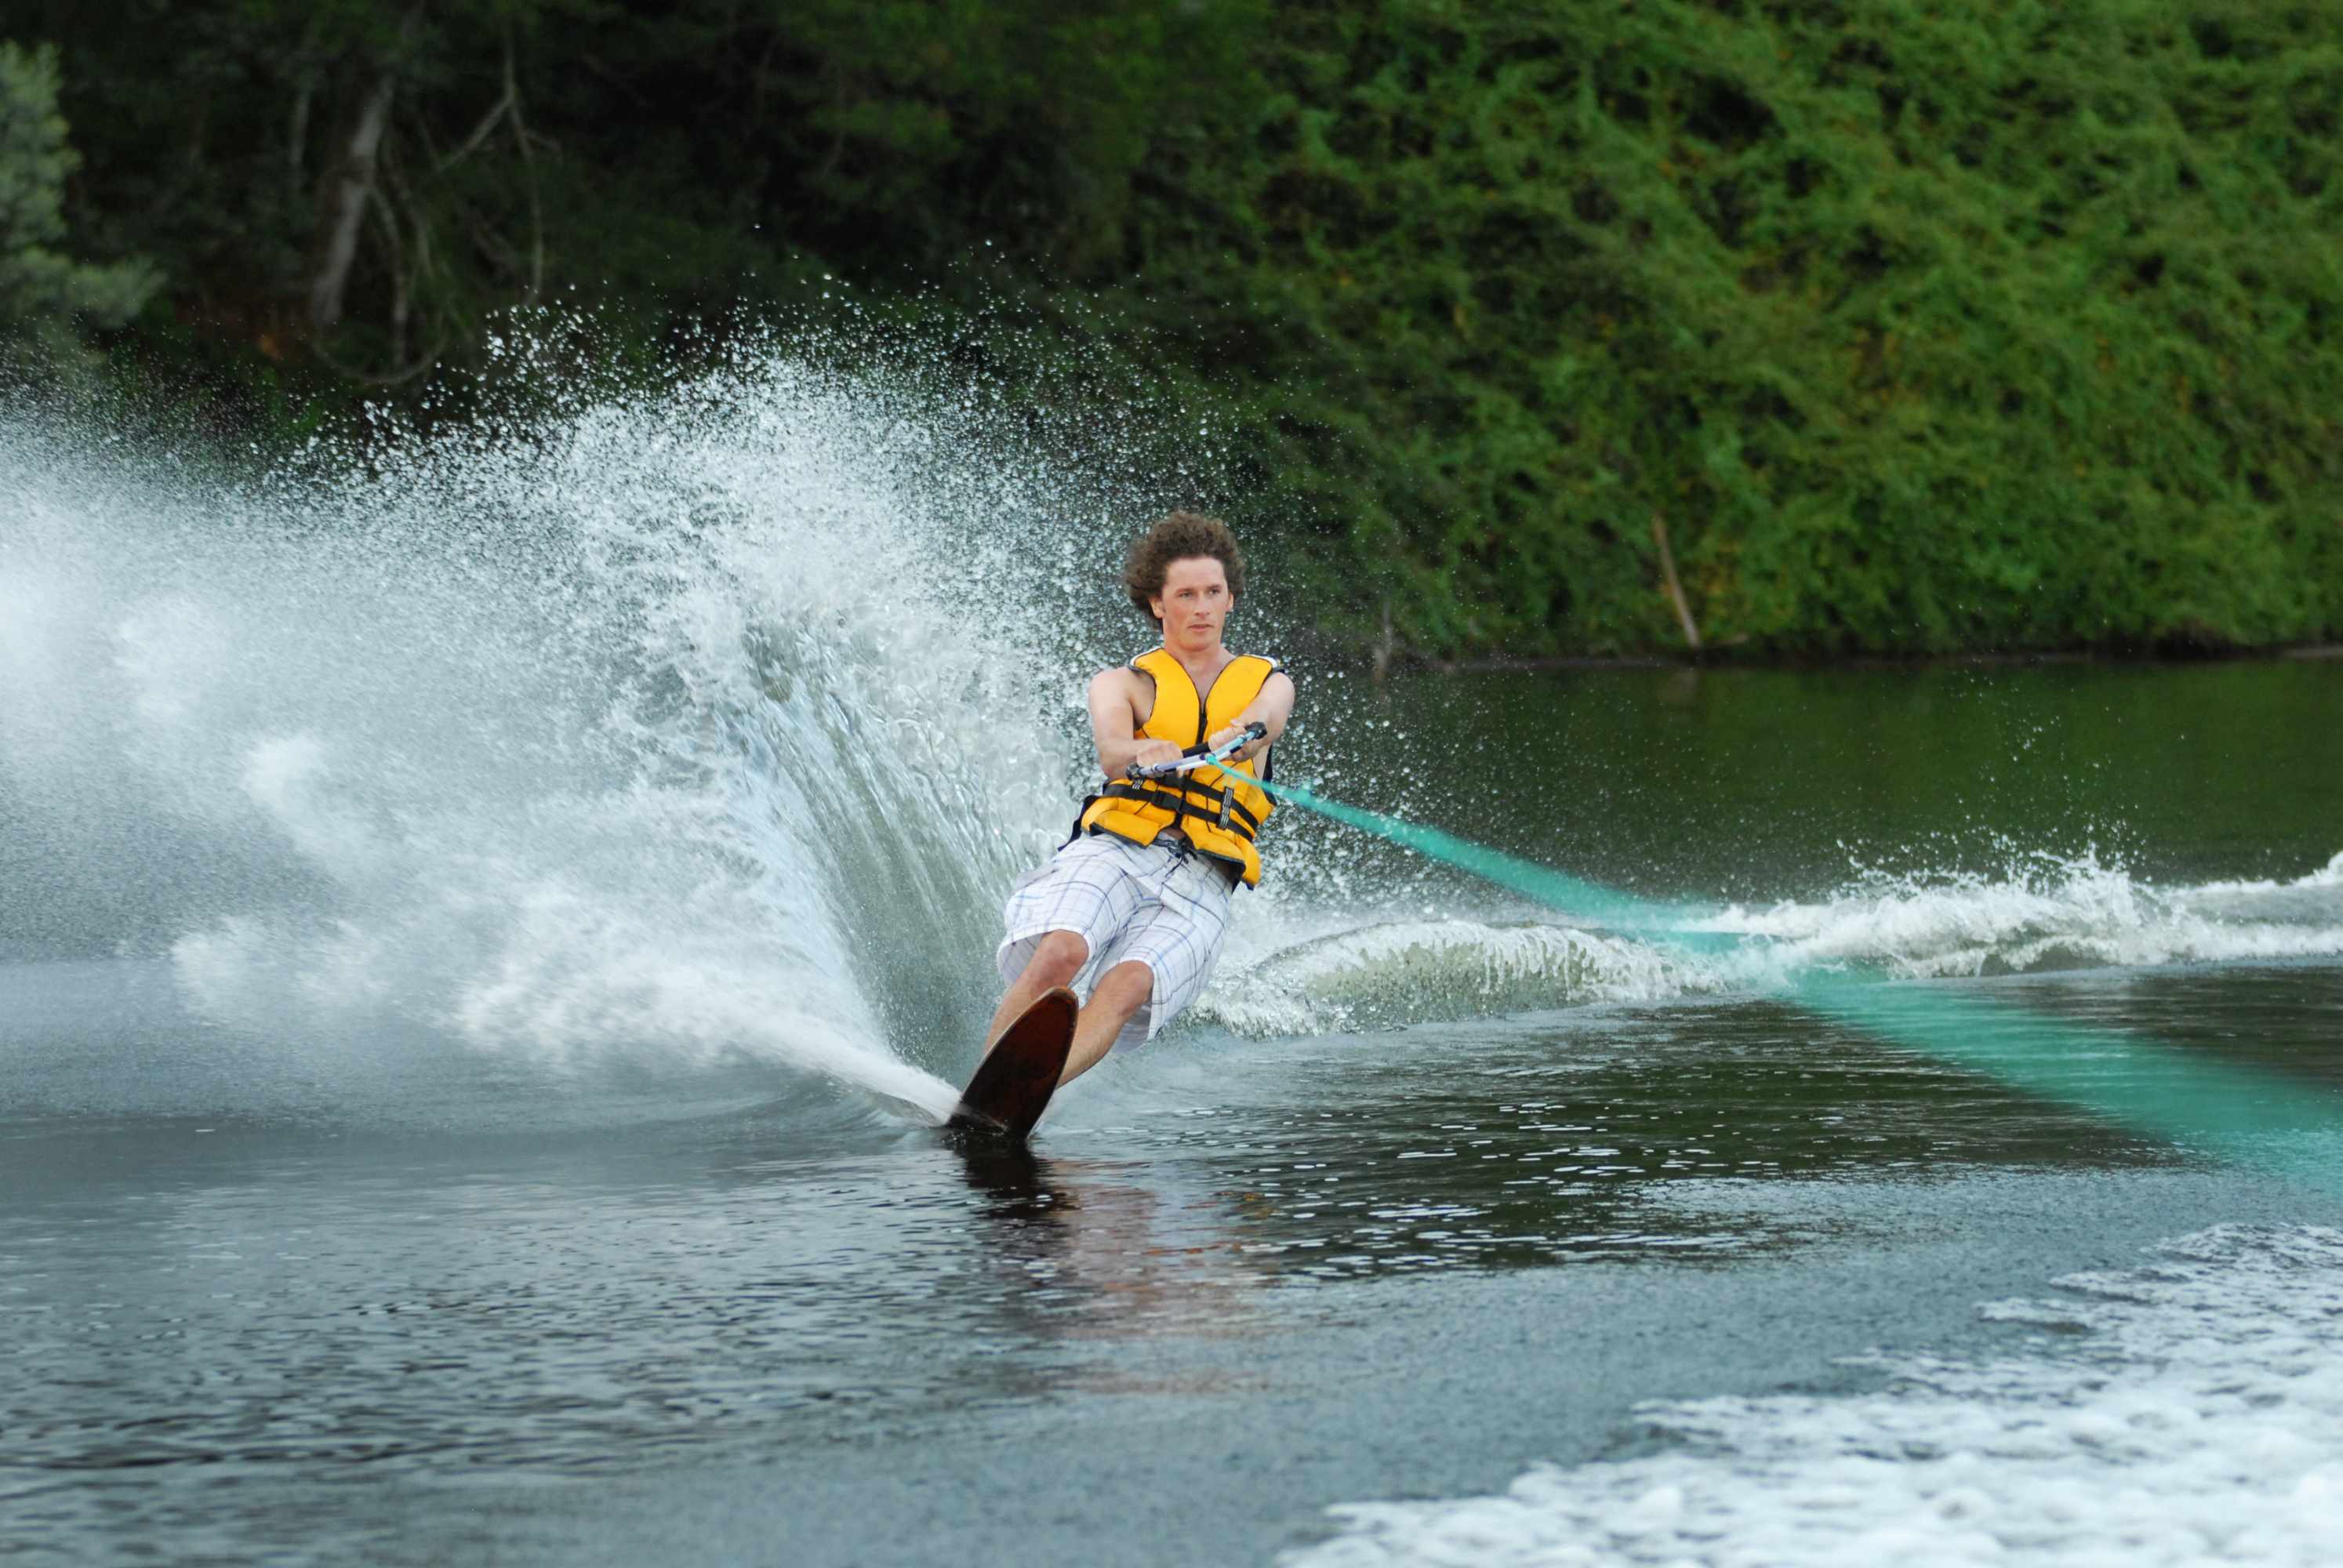 a boy teenager water skiing wearing a life jacket